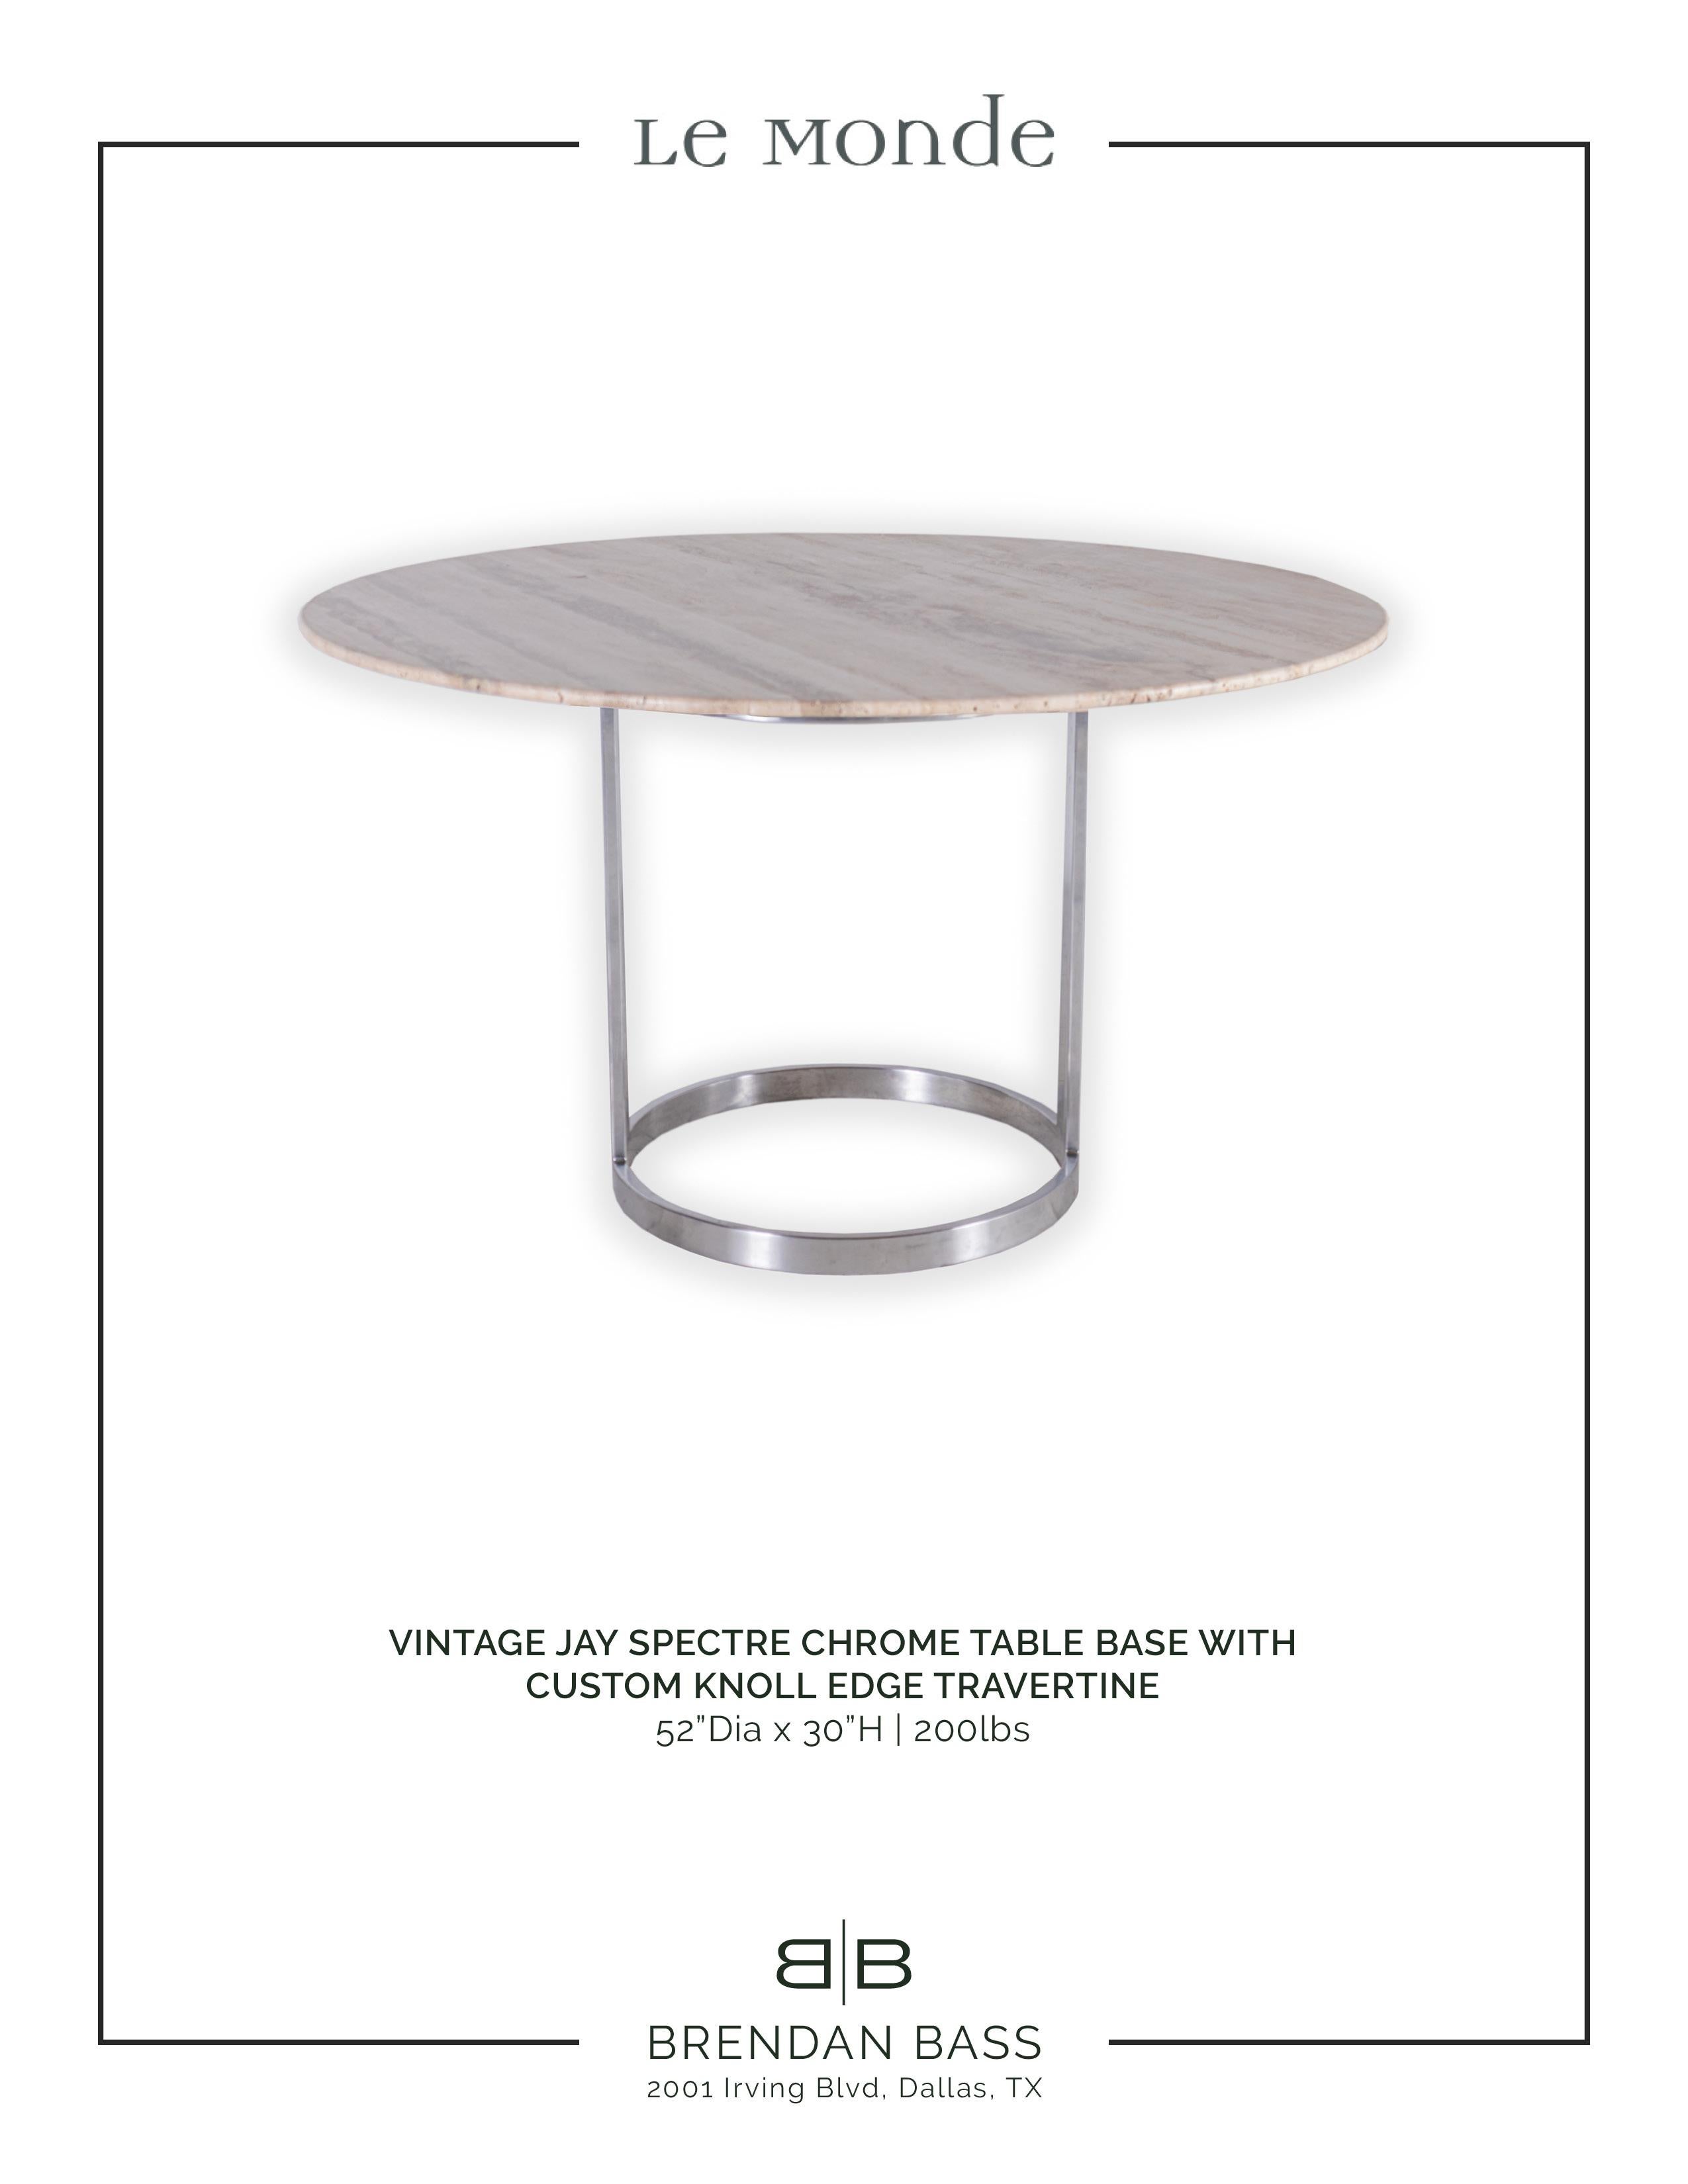 Jay Spectre Chrome Table Base with Custom Knoll Edge Travertine 1